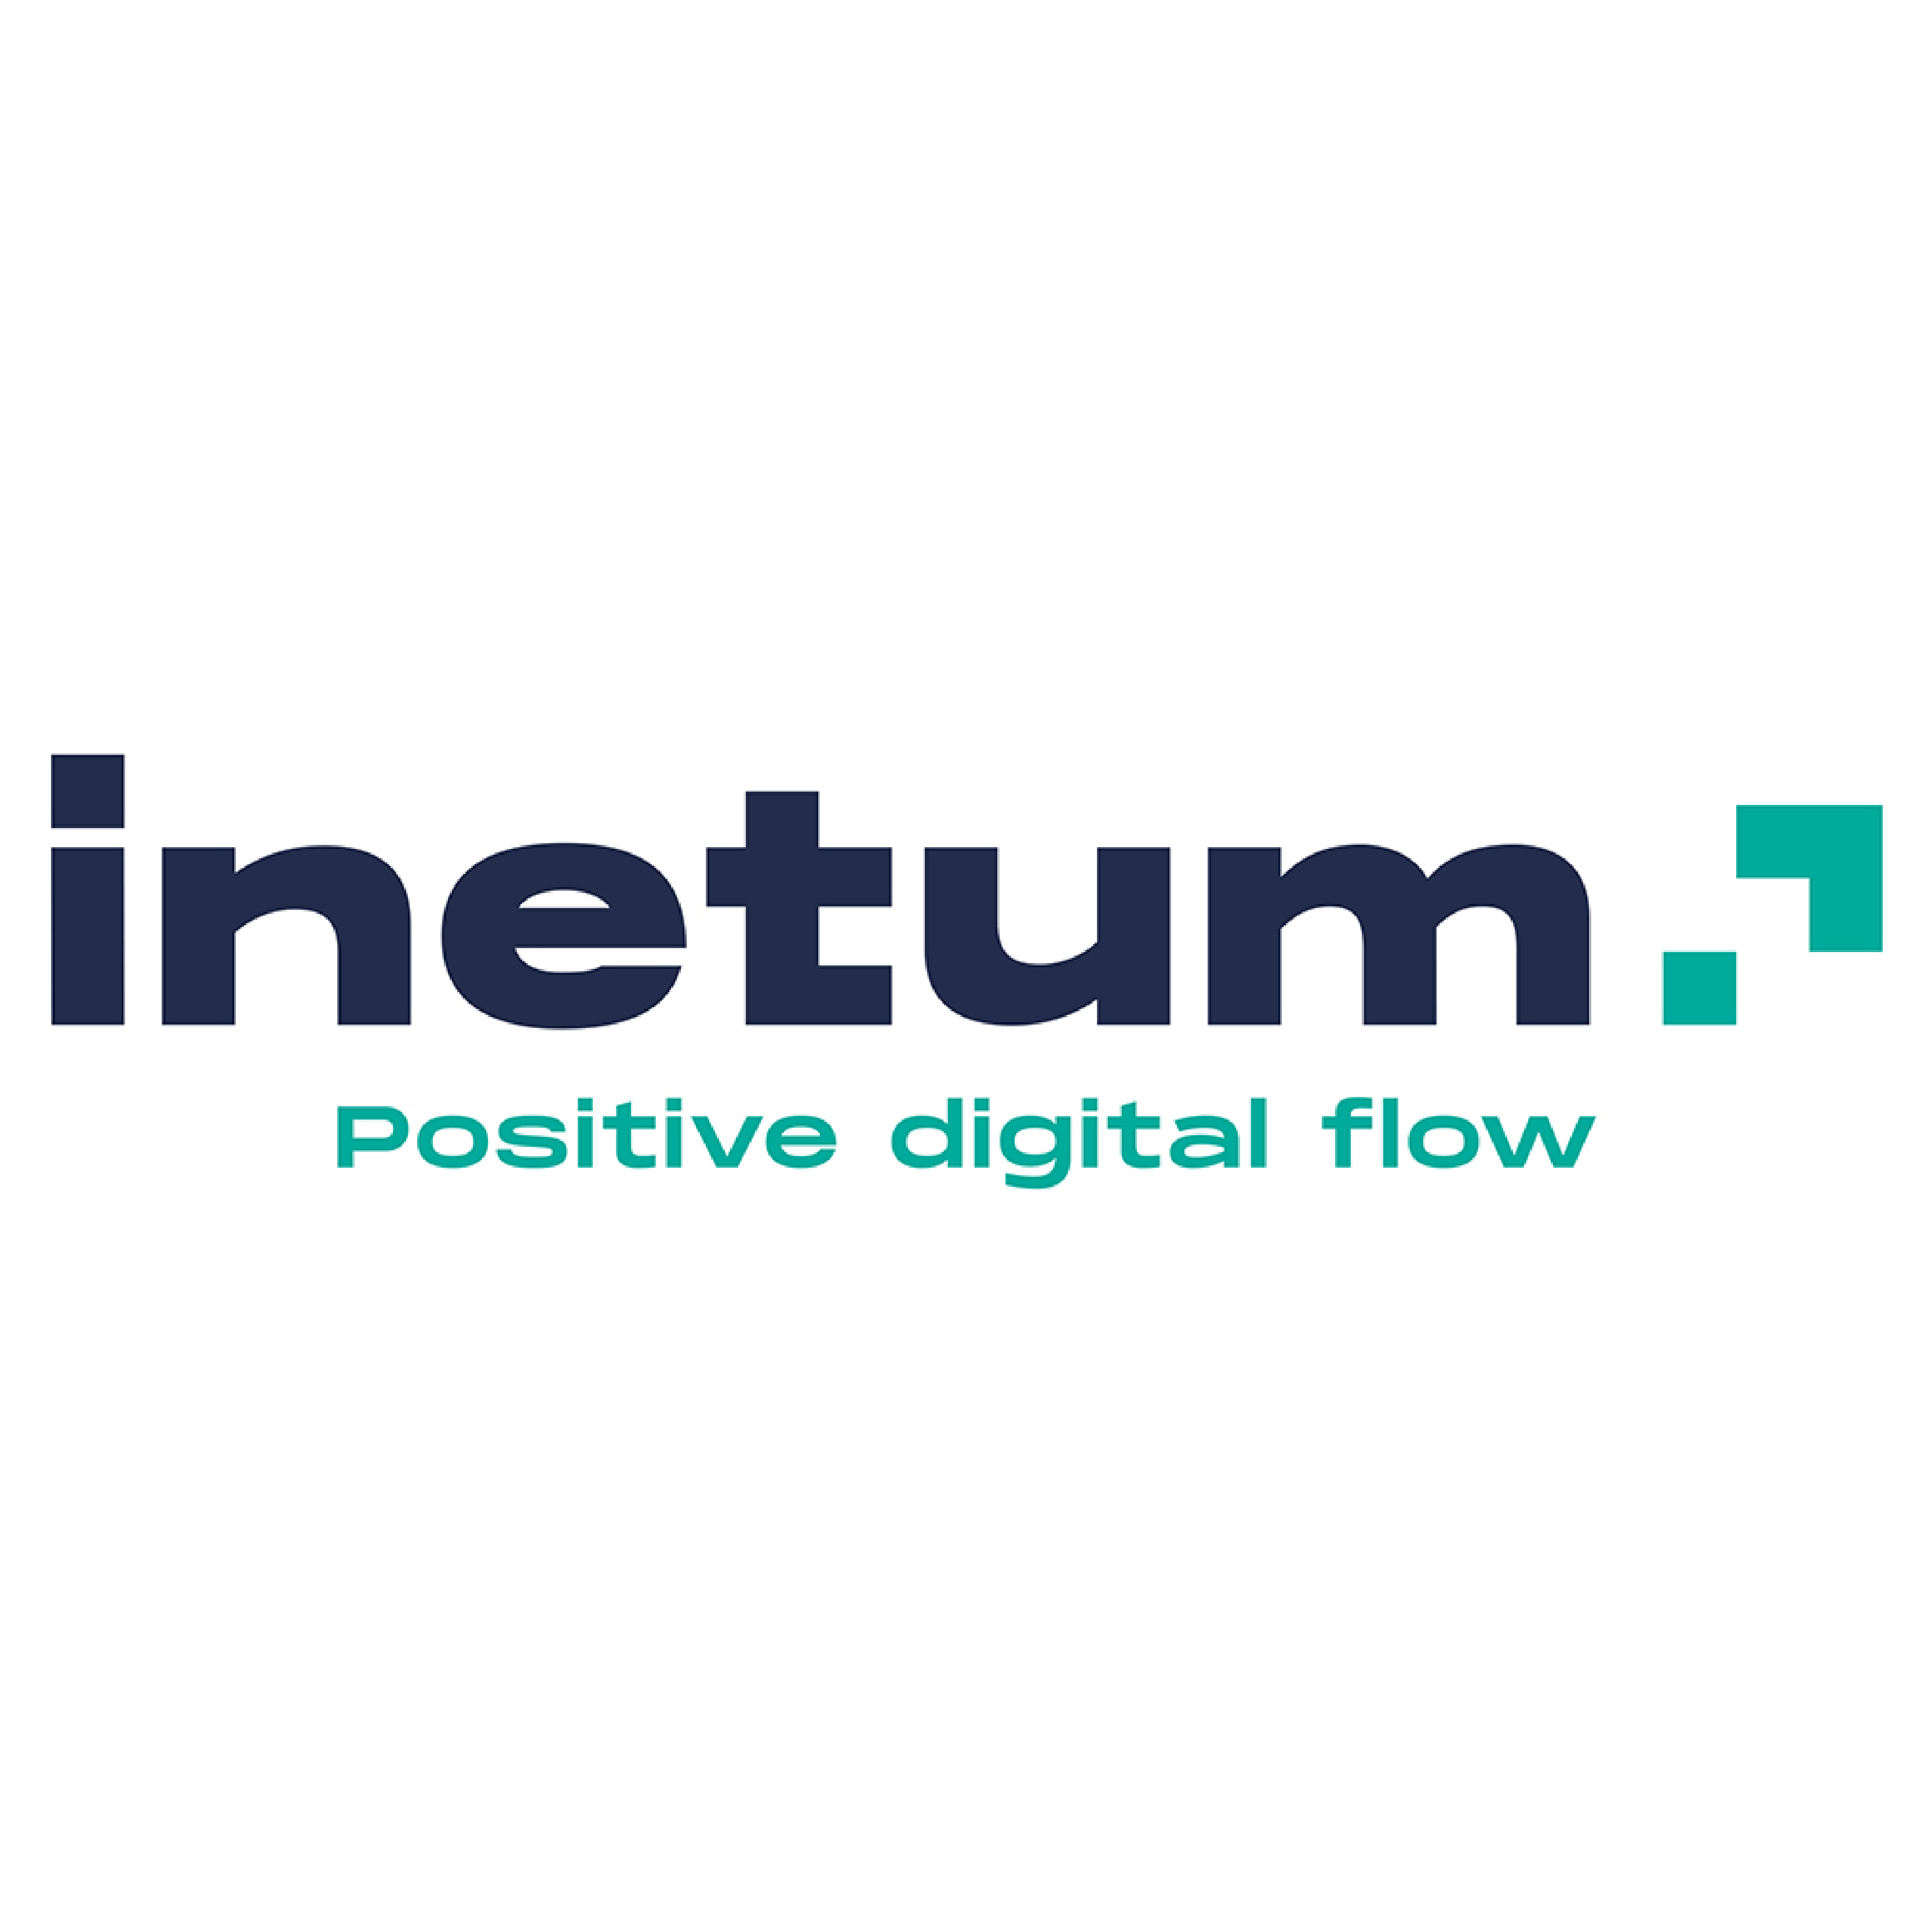 Inetum Positive digital flow